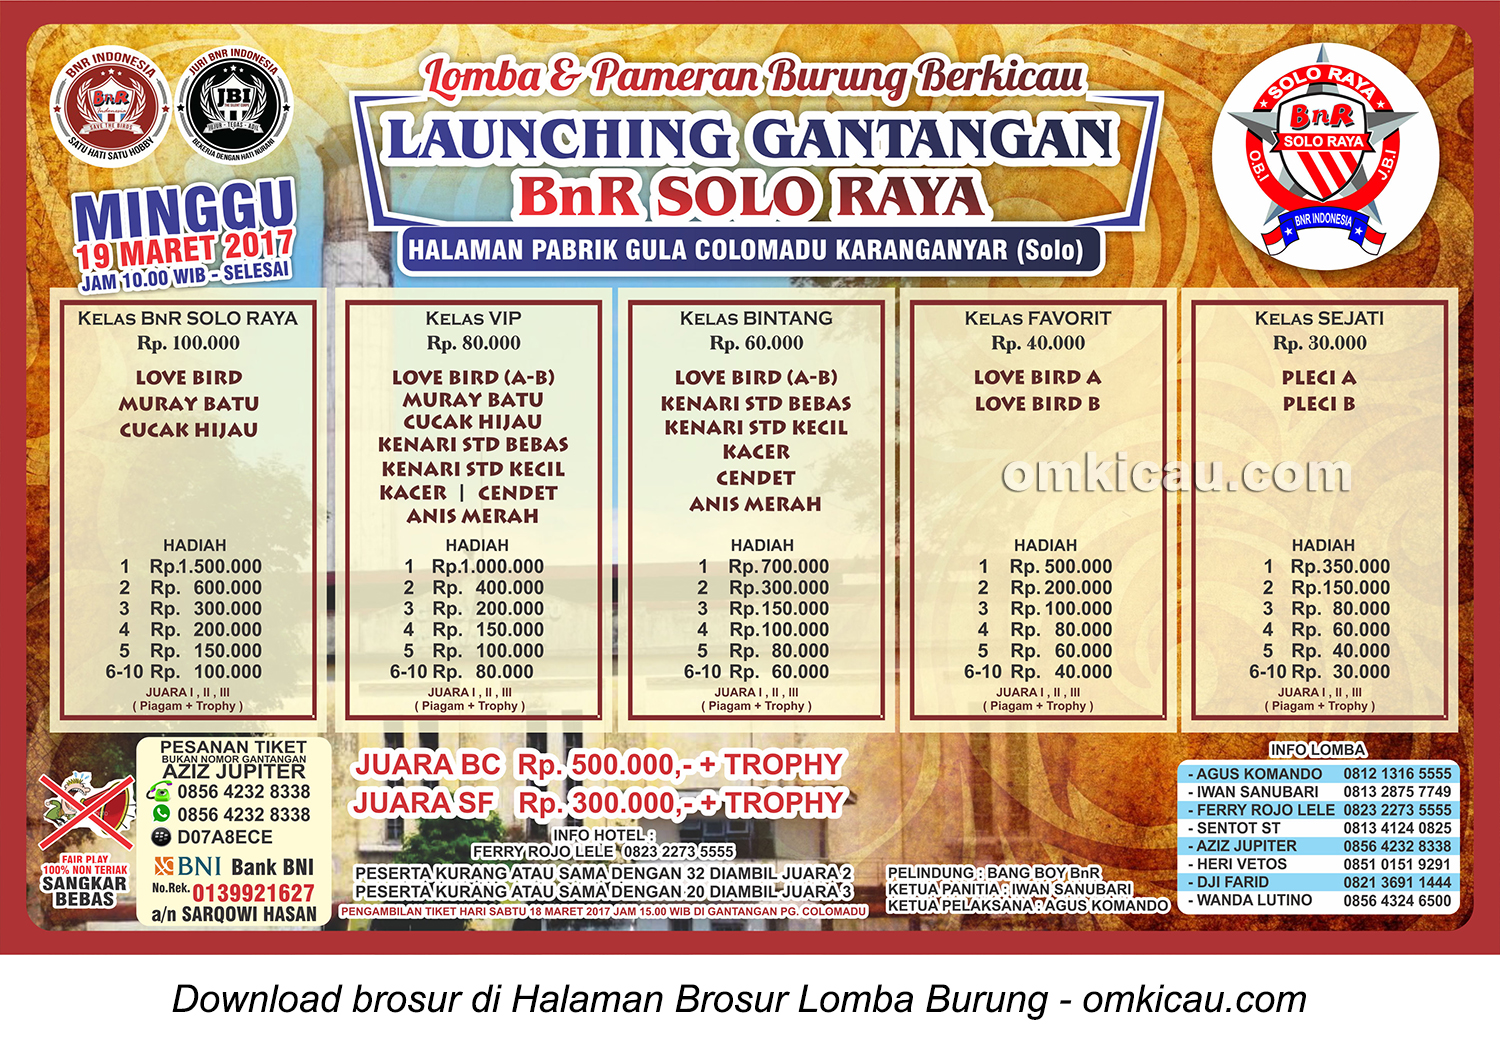 Brosur Lomba Burung Berkicau Launching Gantangan BnR Solo Raya, Karanganyar, 19 Maret 2017